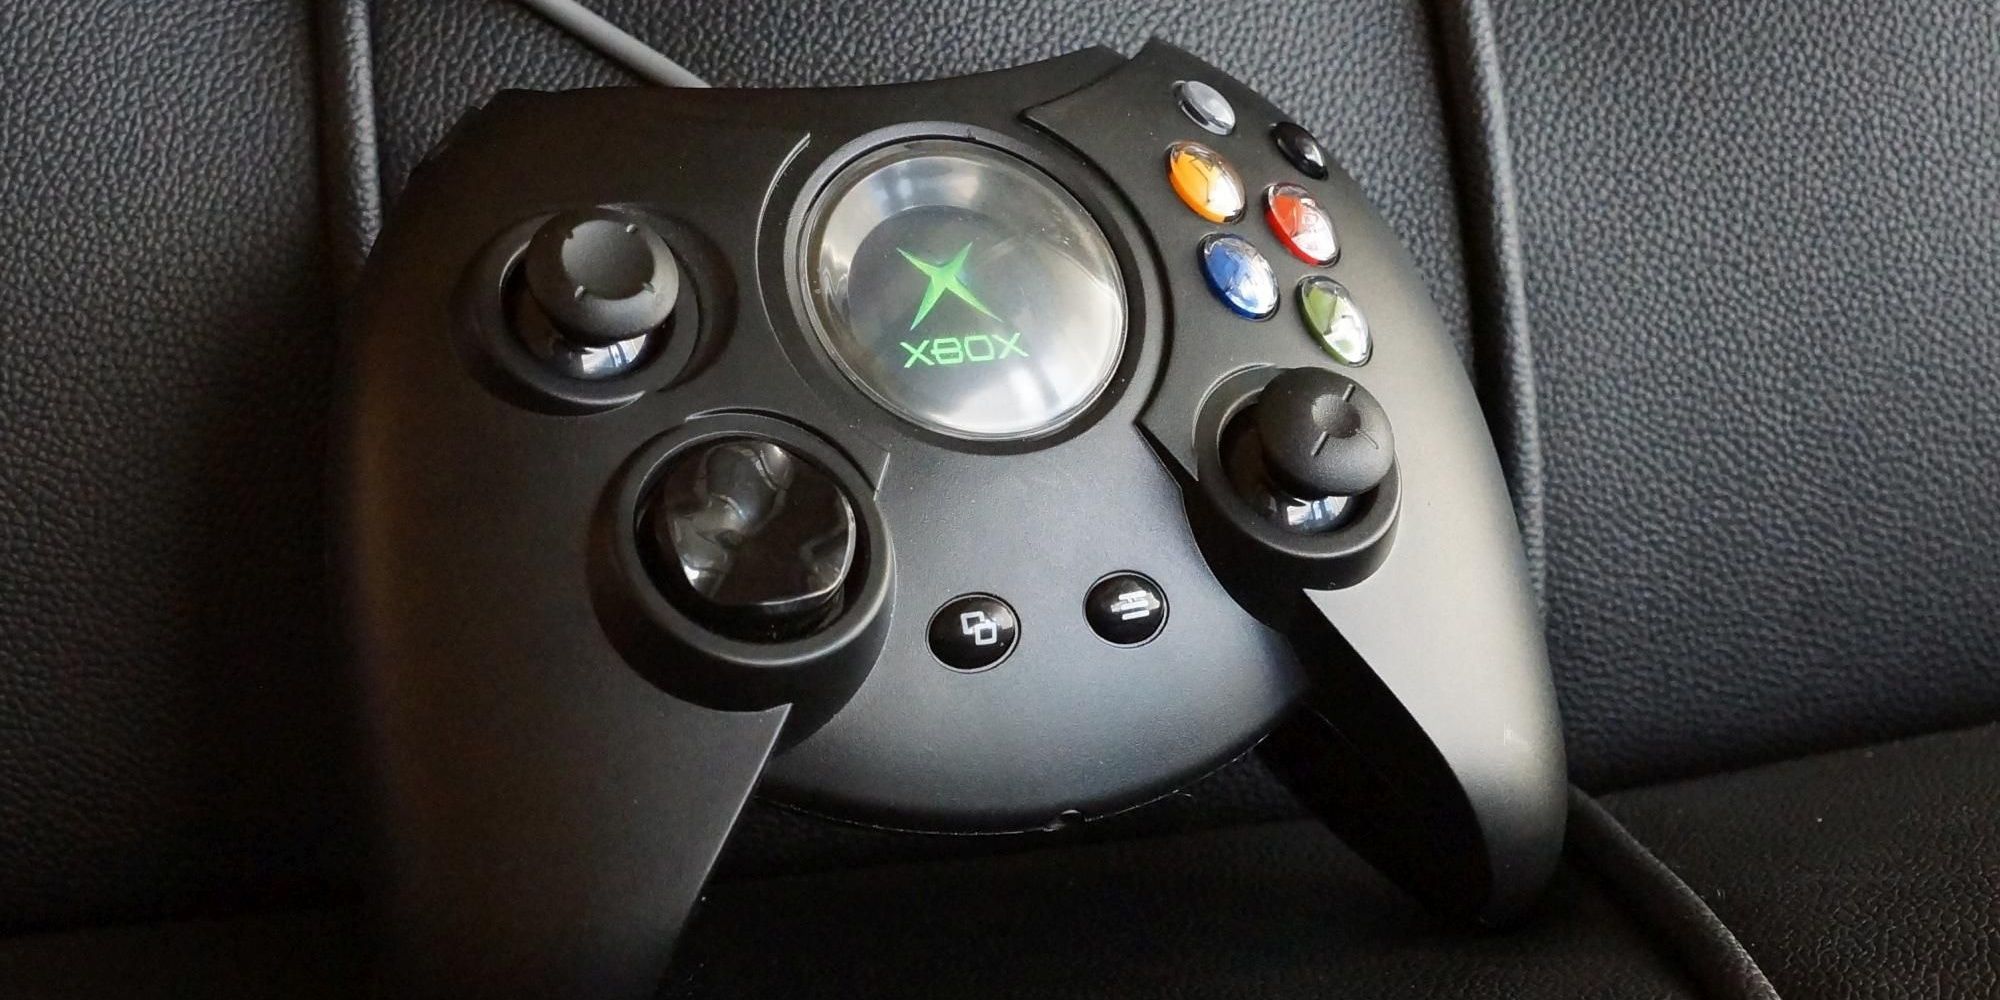 Xbox Duke Controller For The Original Xbox.